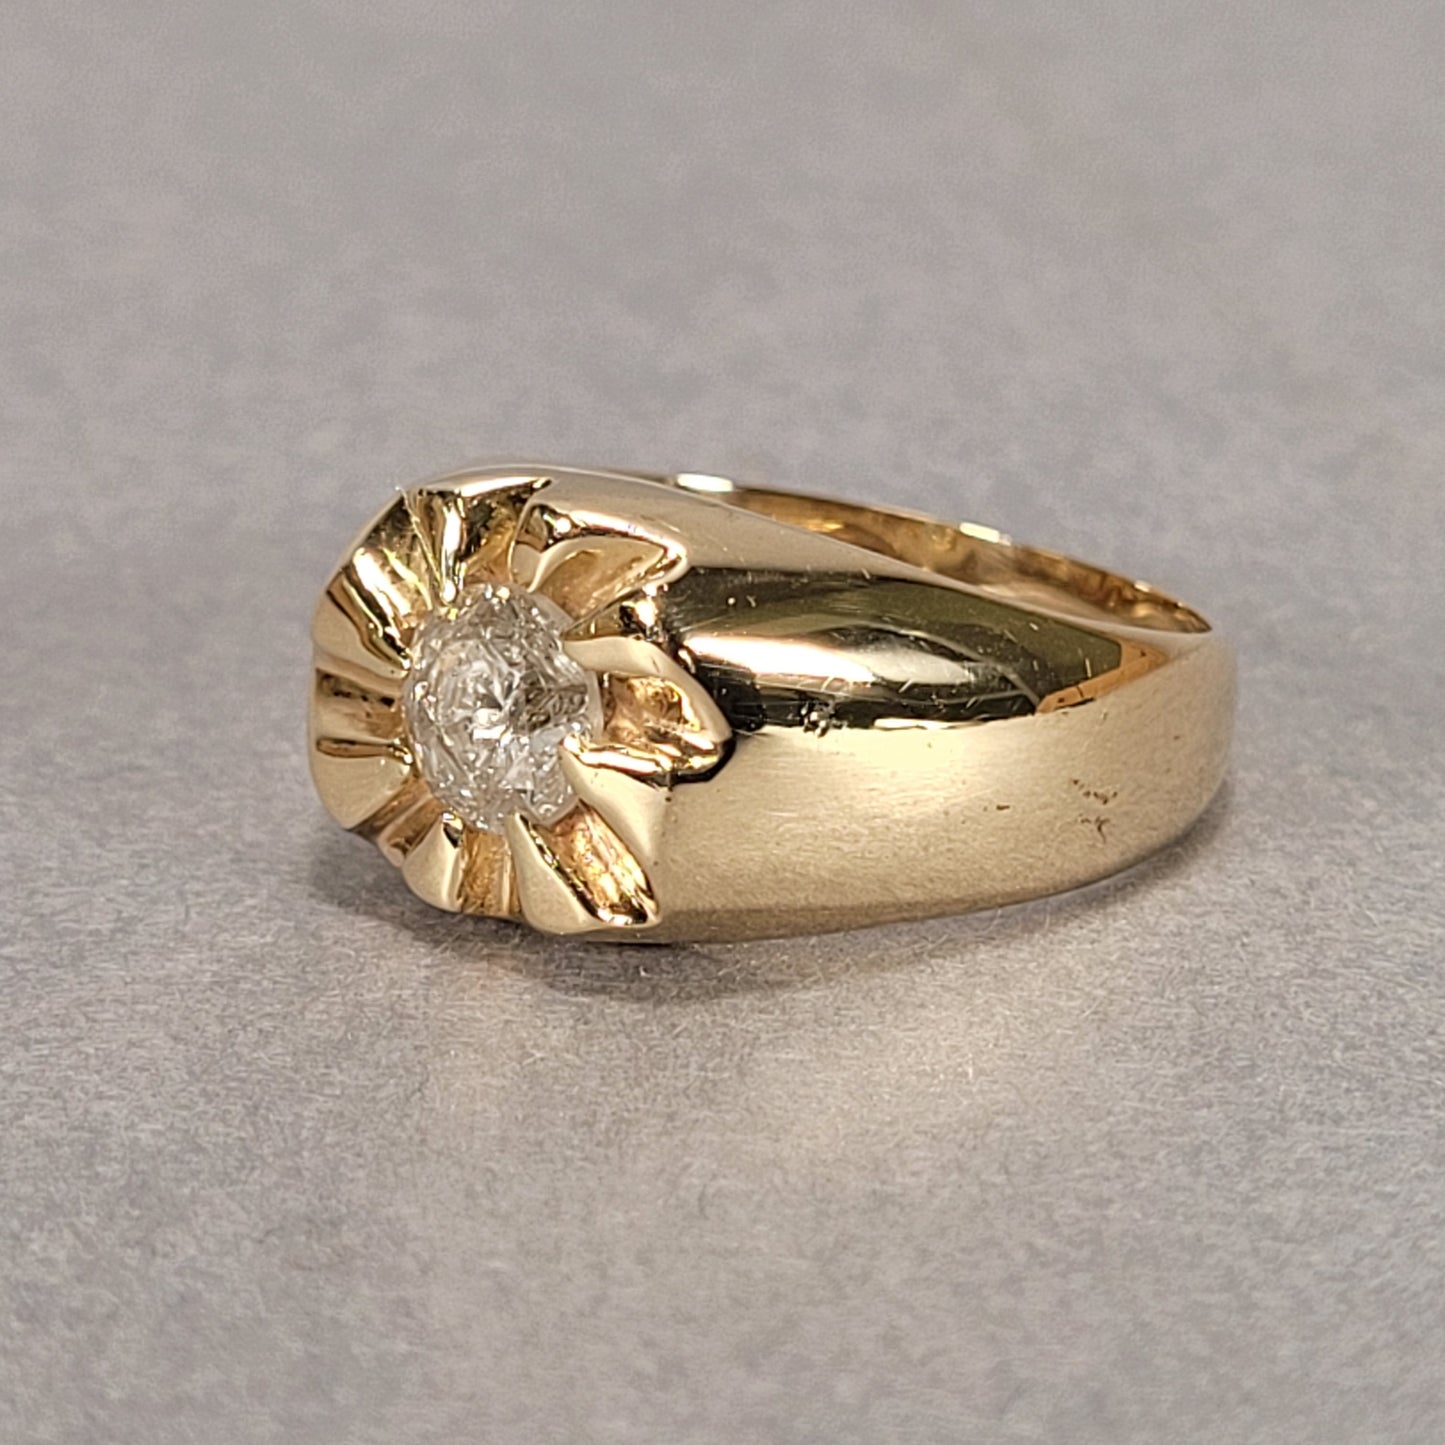 Men's 14k Yellow Gold Ring With 1 Large Diamond 7.6g